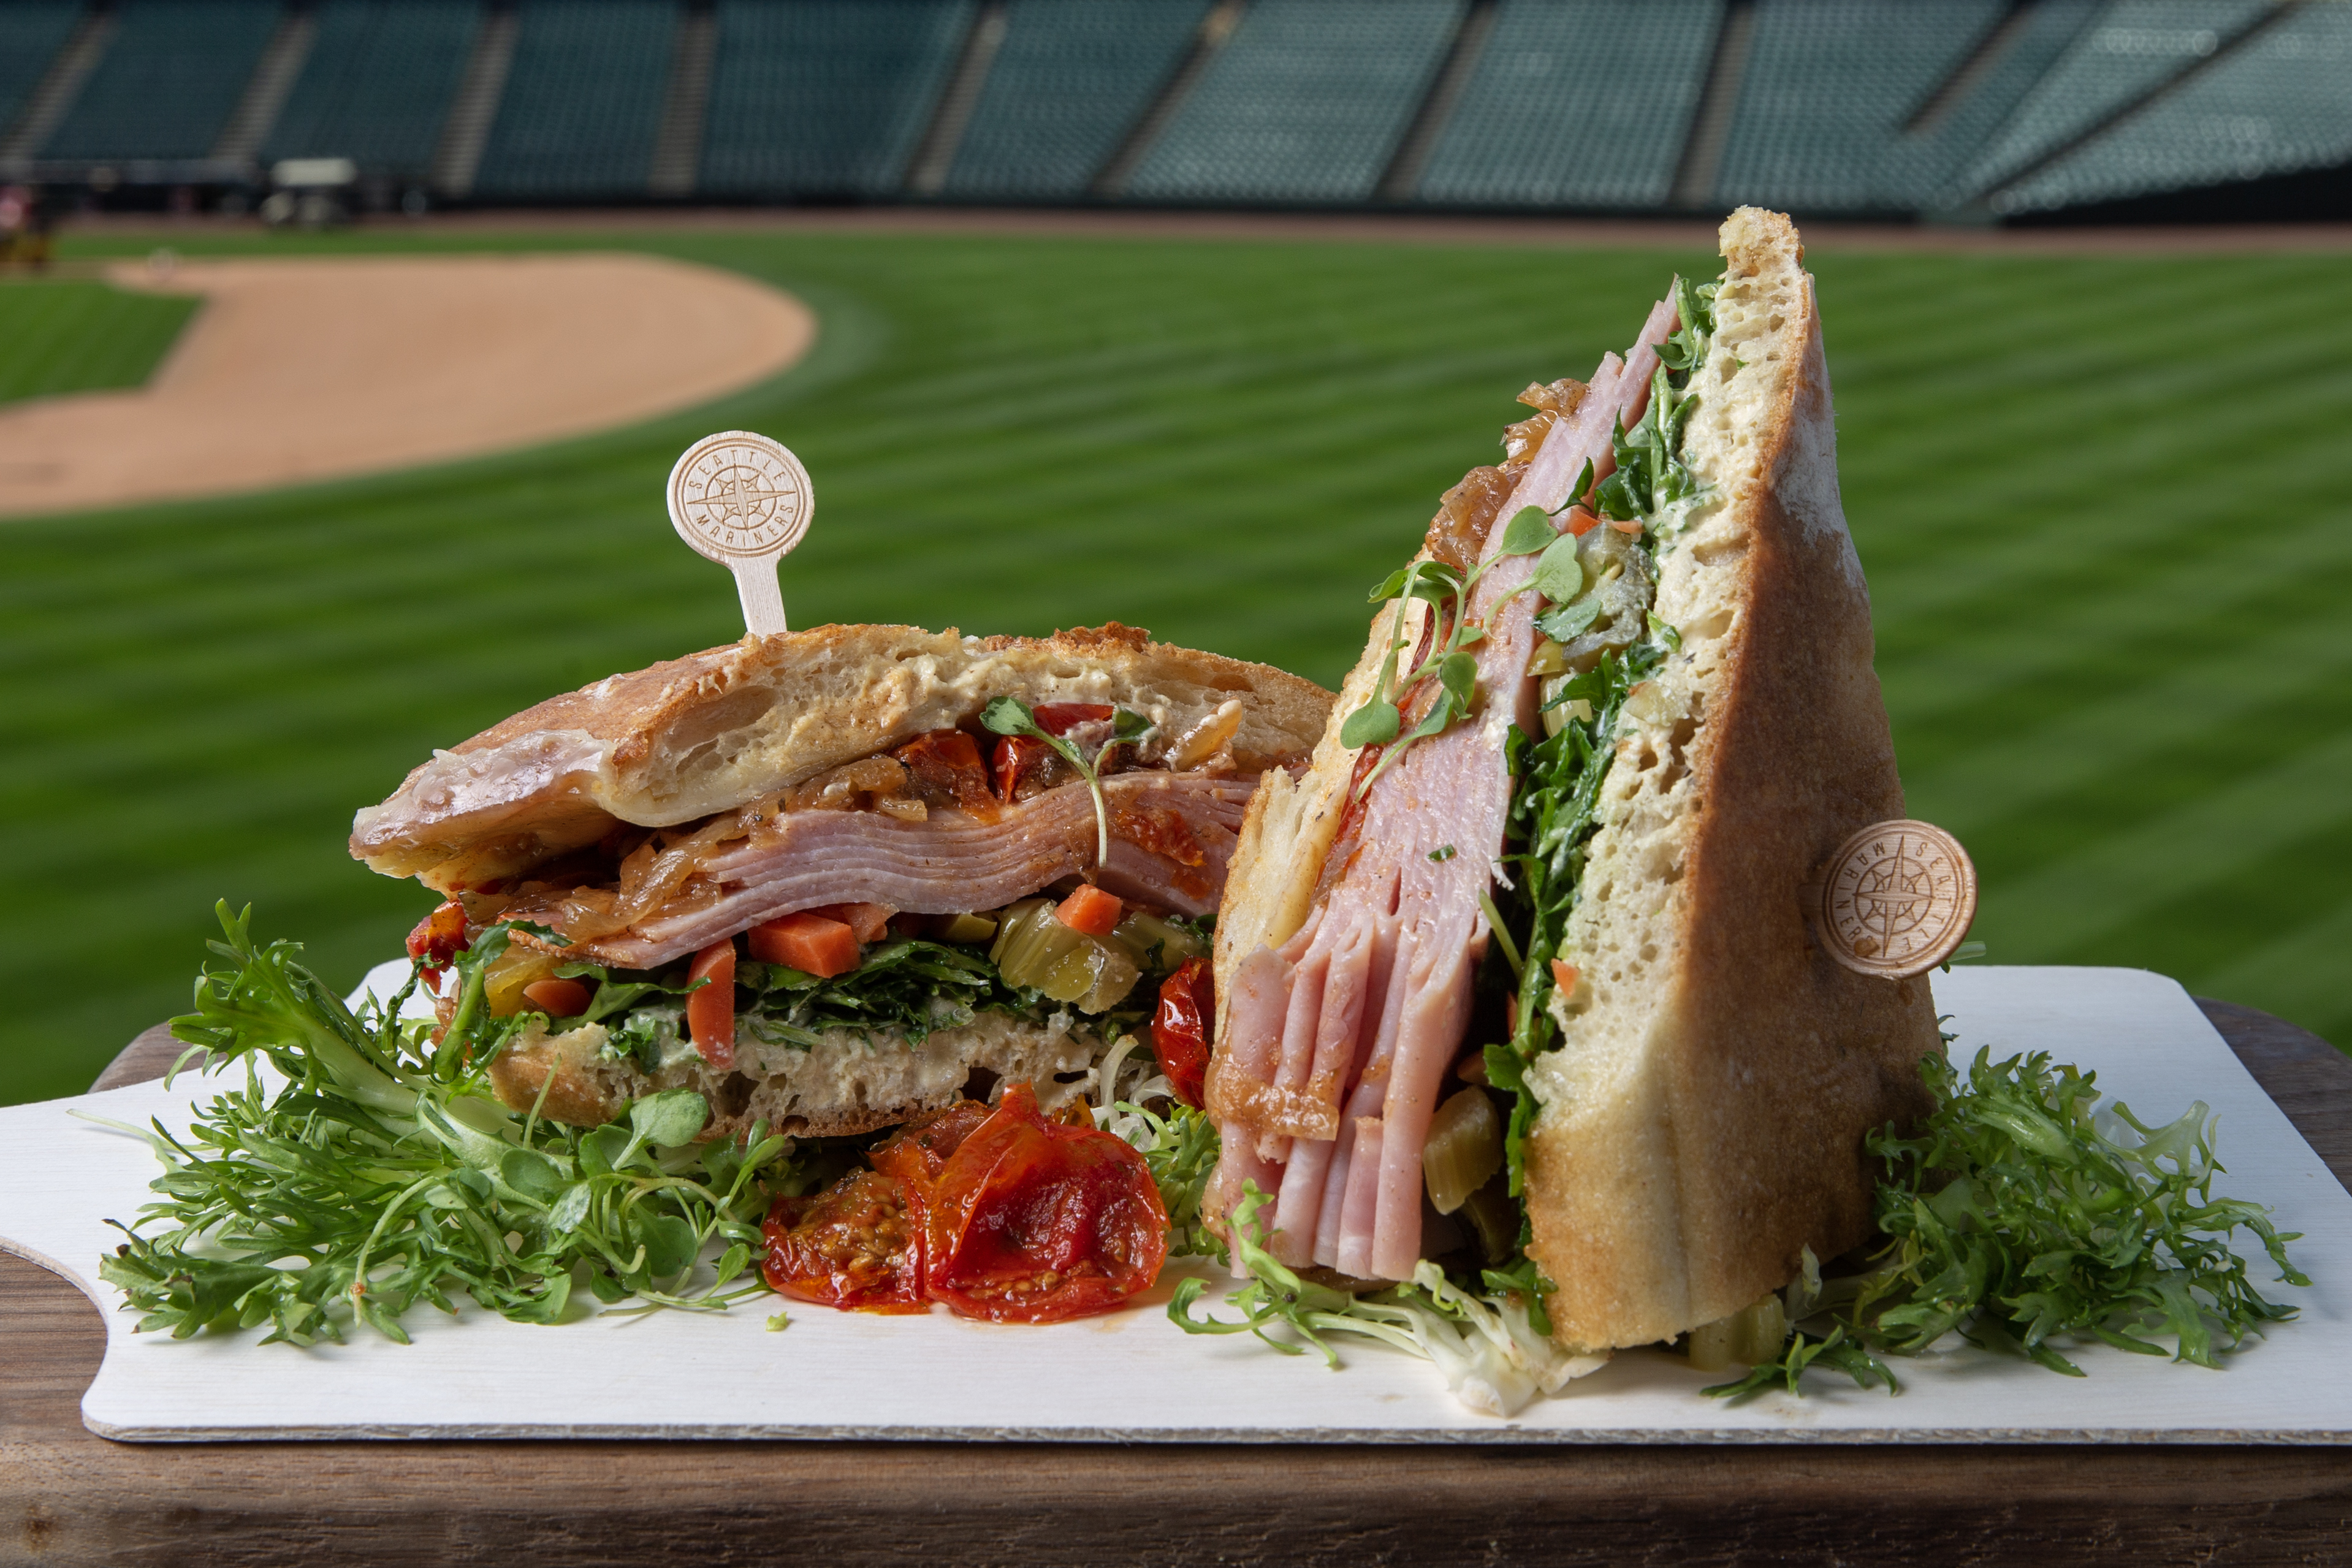 Large ham sandwich at baseball stadium